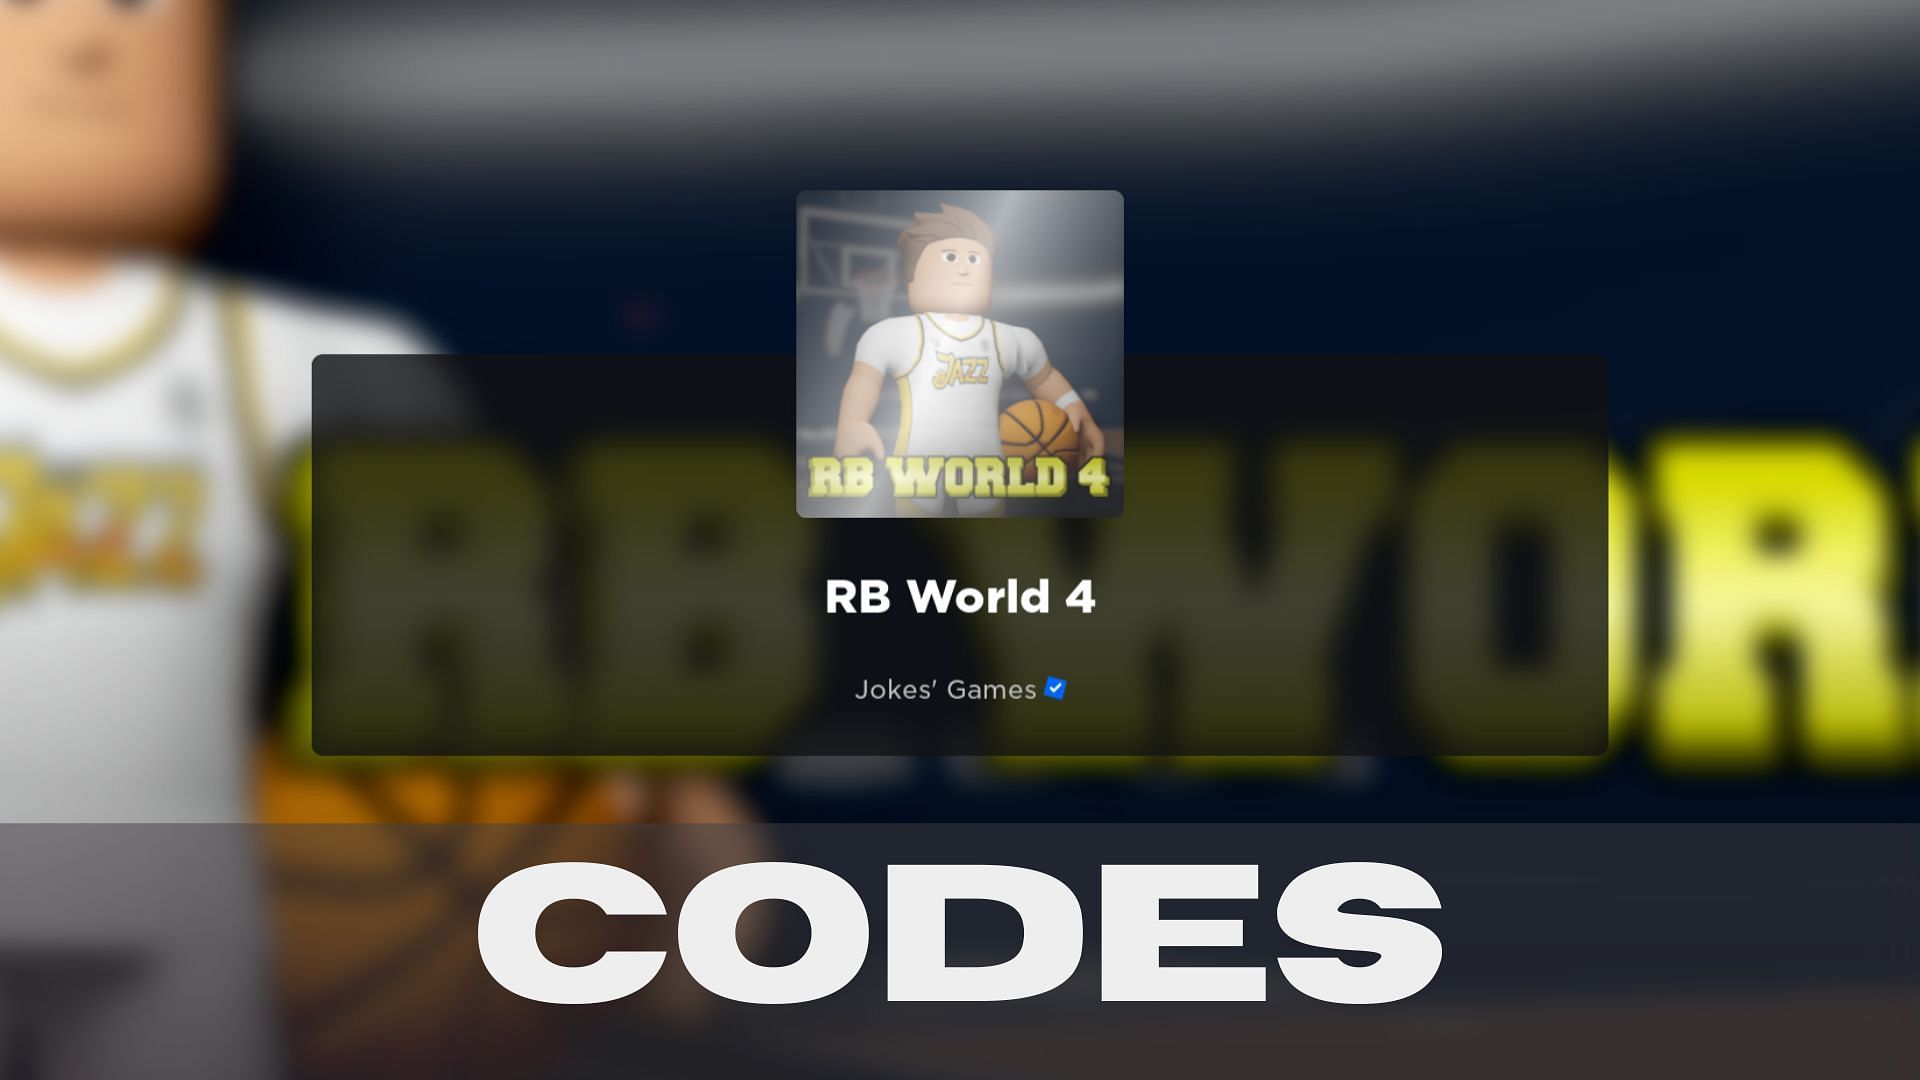 RB World 4 codes